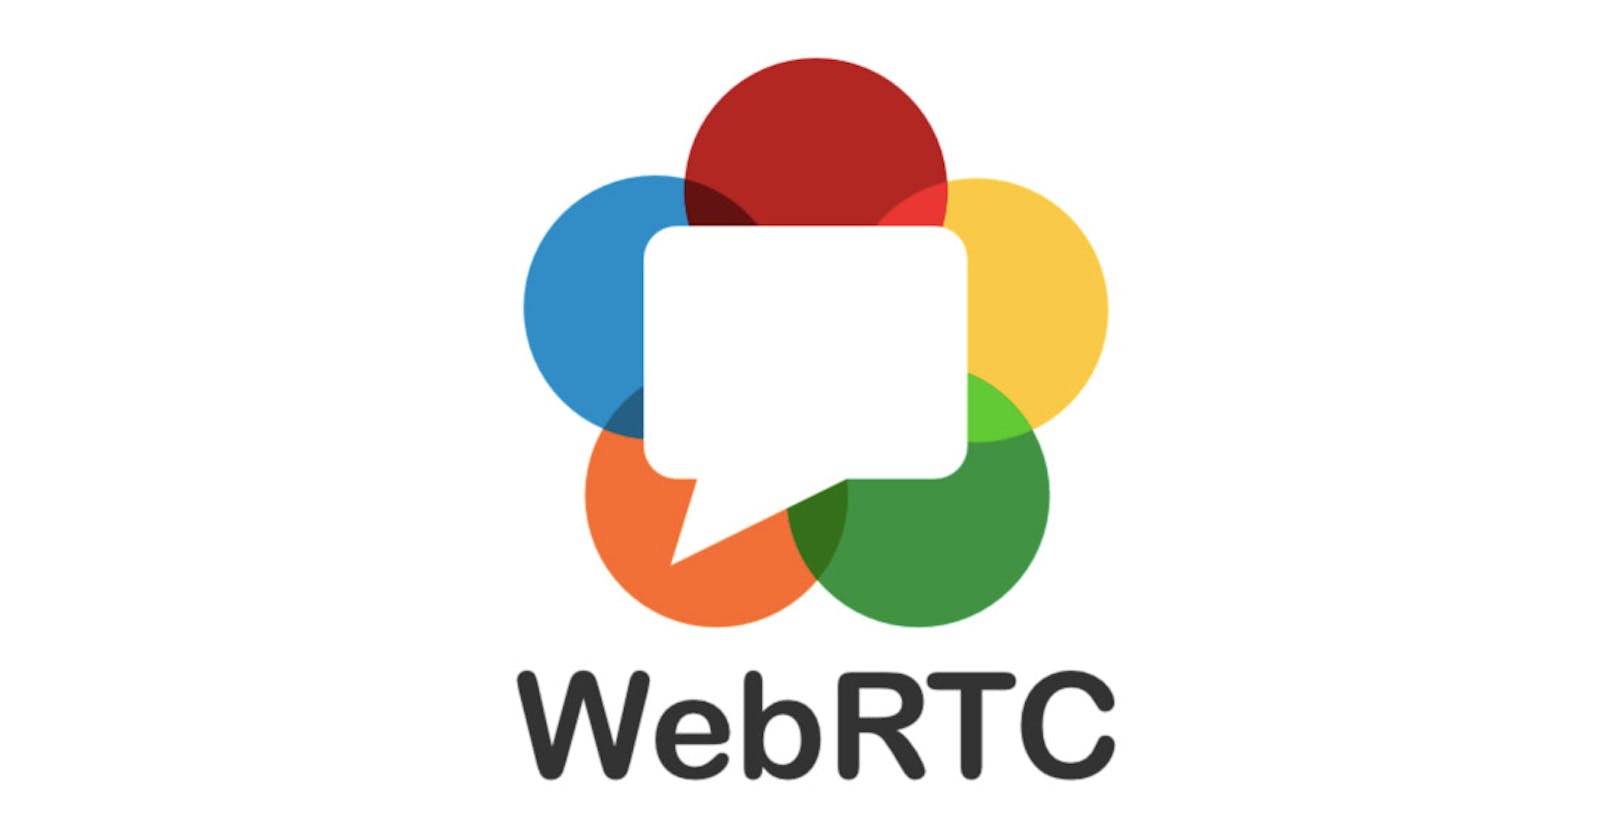 Working with WebRTC